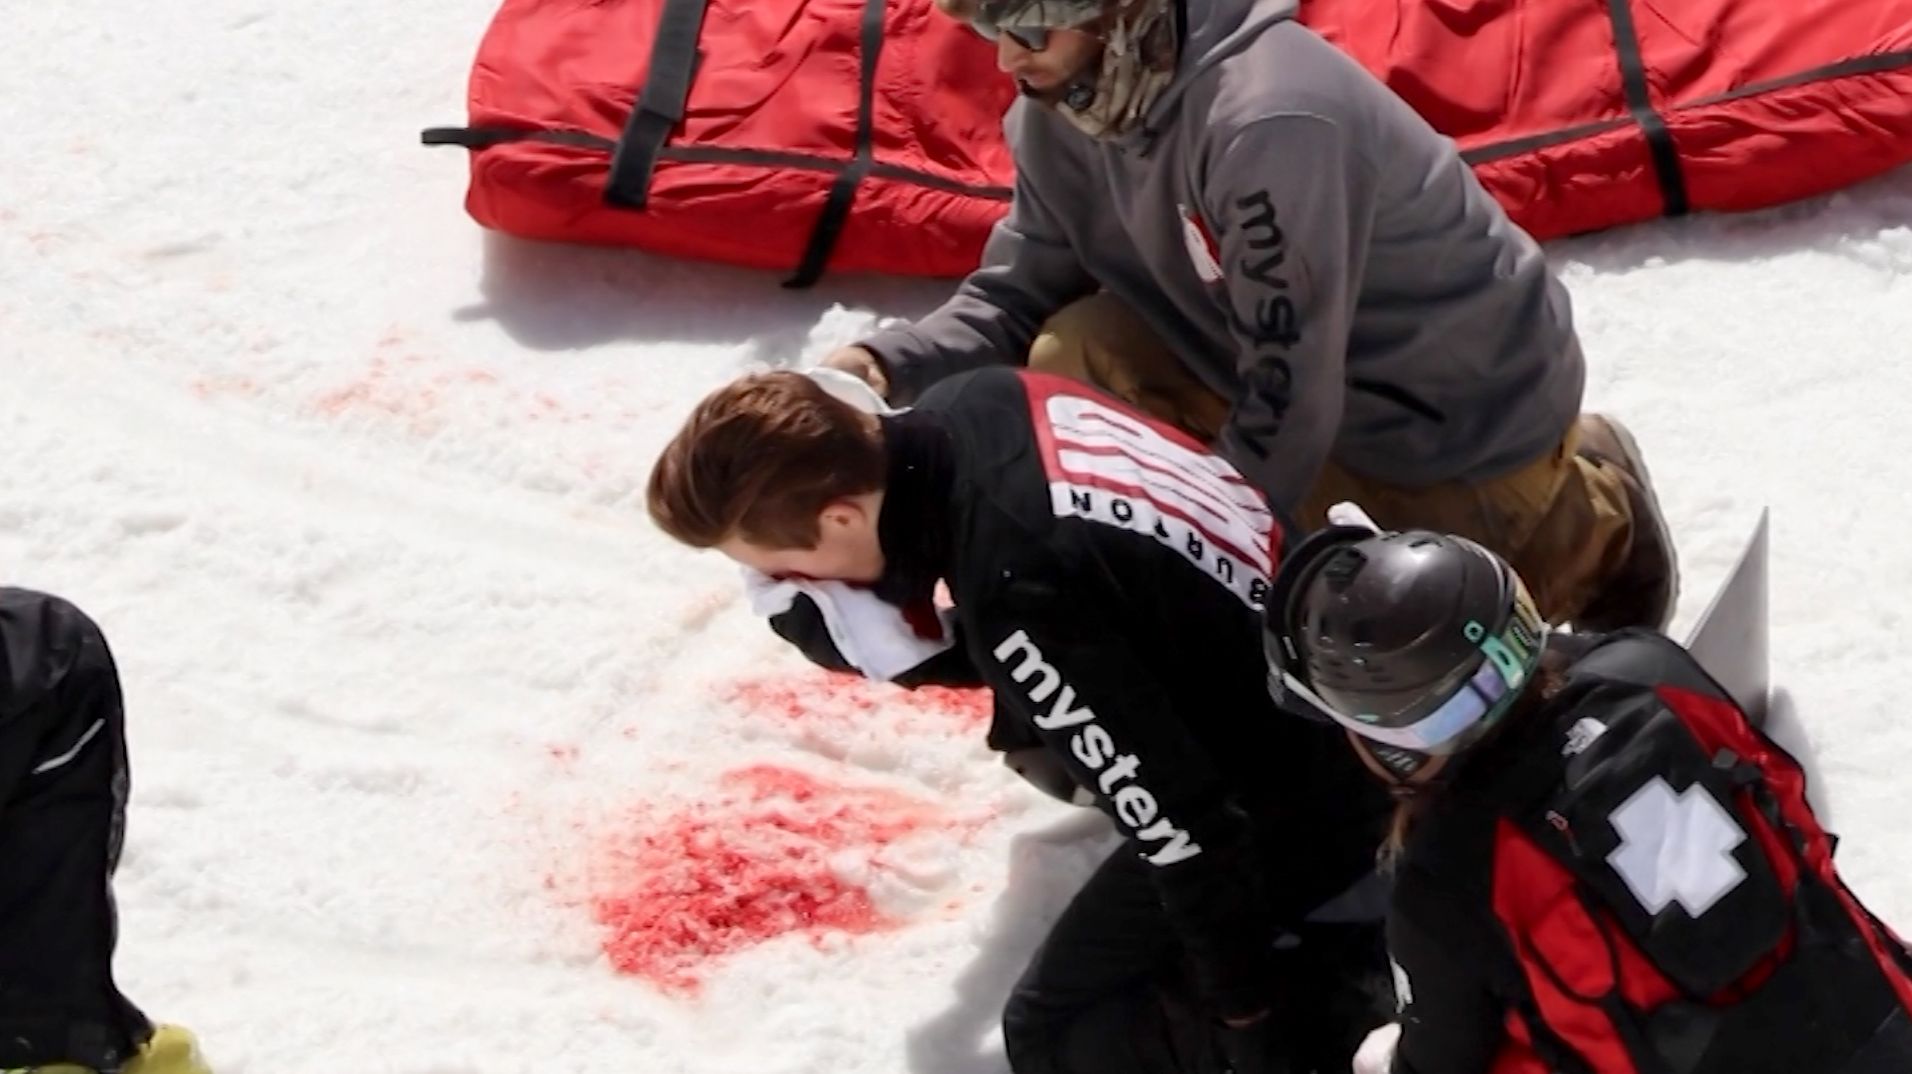 Shaun White crashes in New Zealand, withdraws from season opener